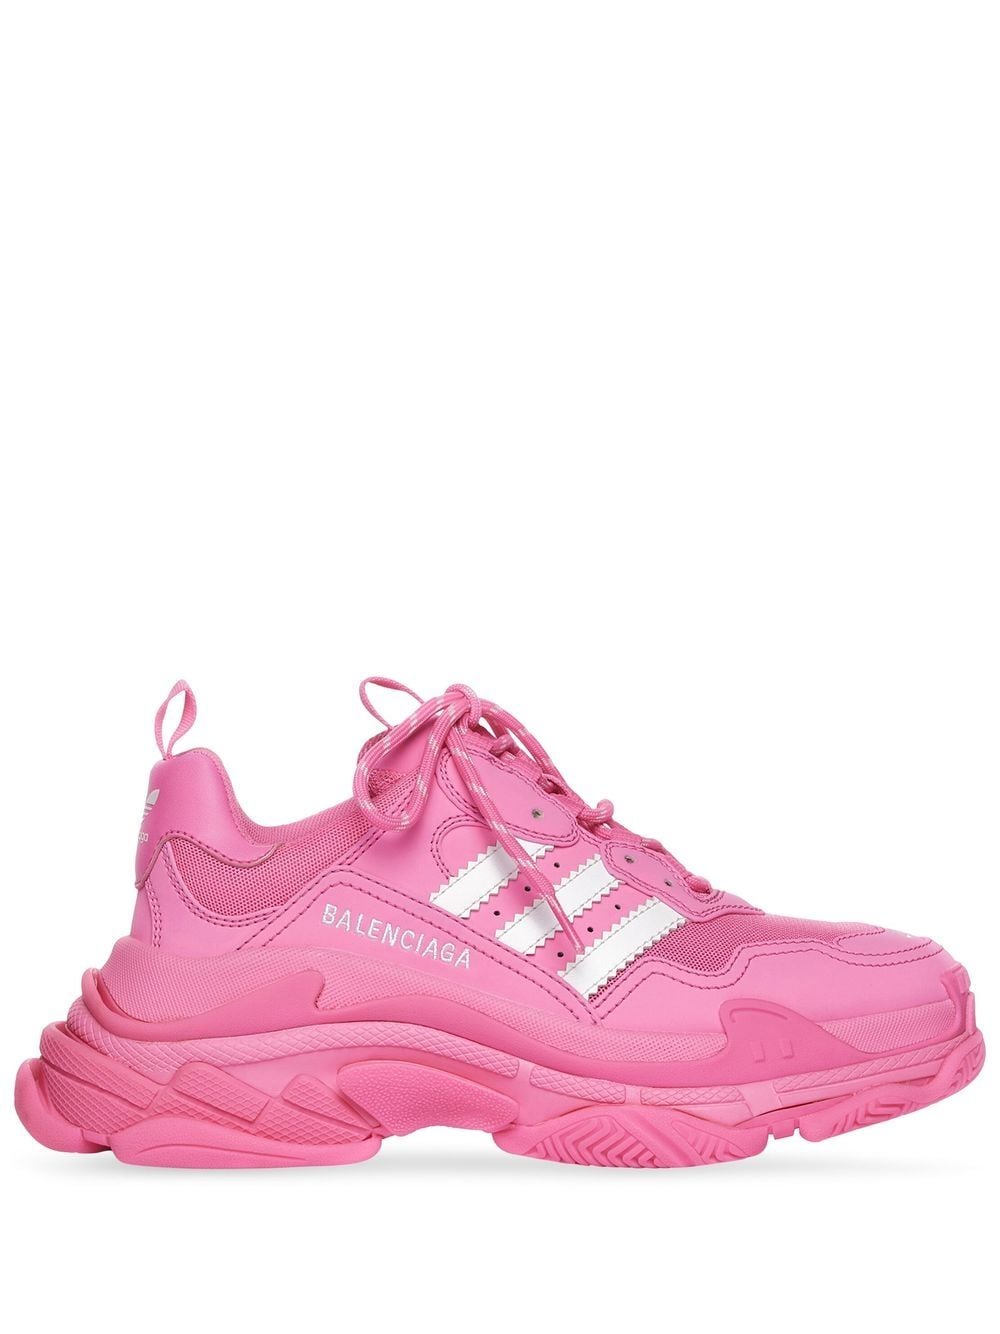 Balenciaga x adidas Triple S sneakers - Pink